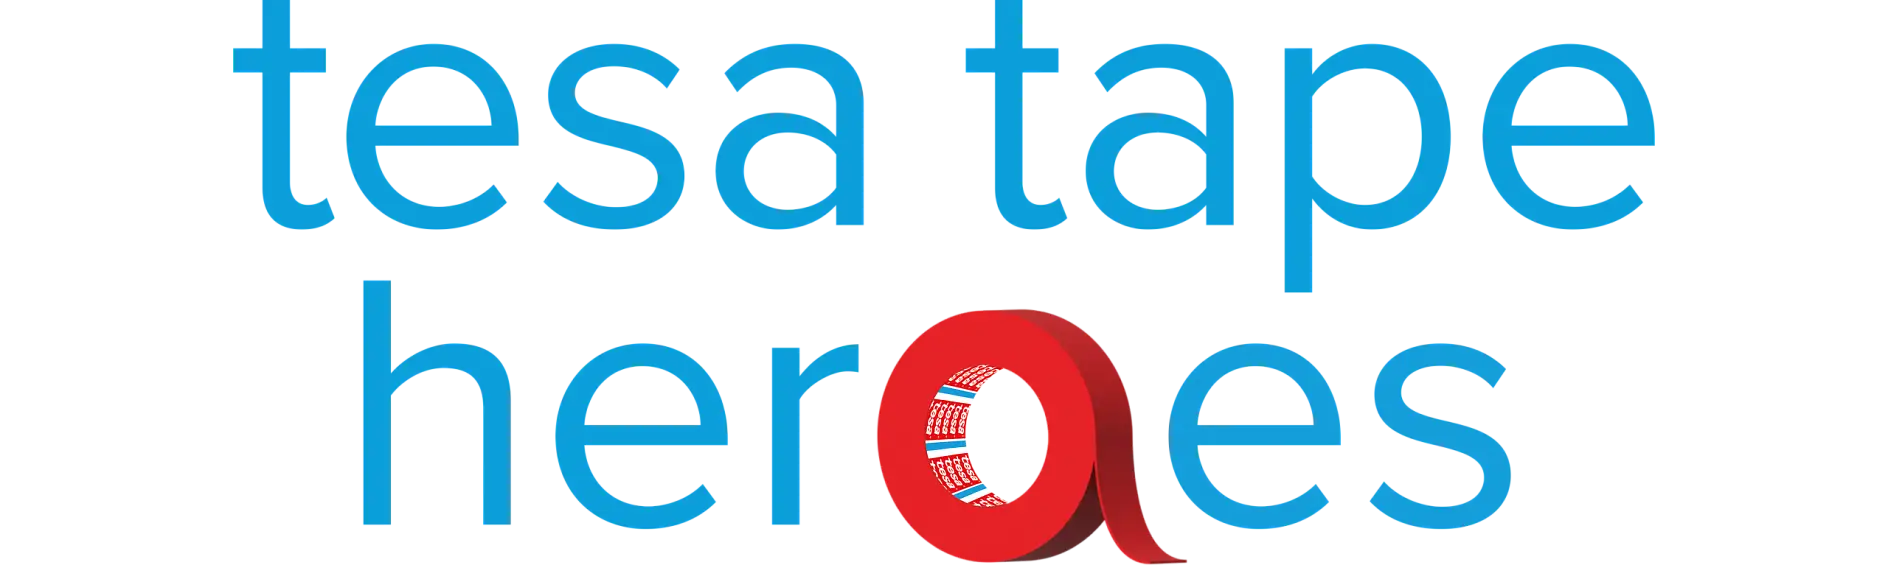 tesa-tape-heroes_logo_bodytext